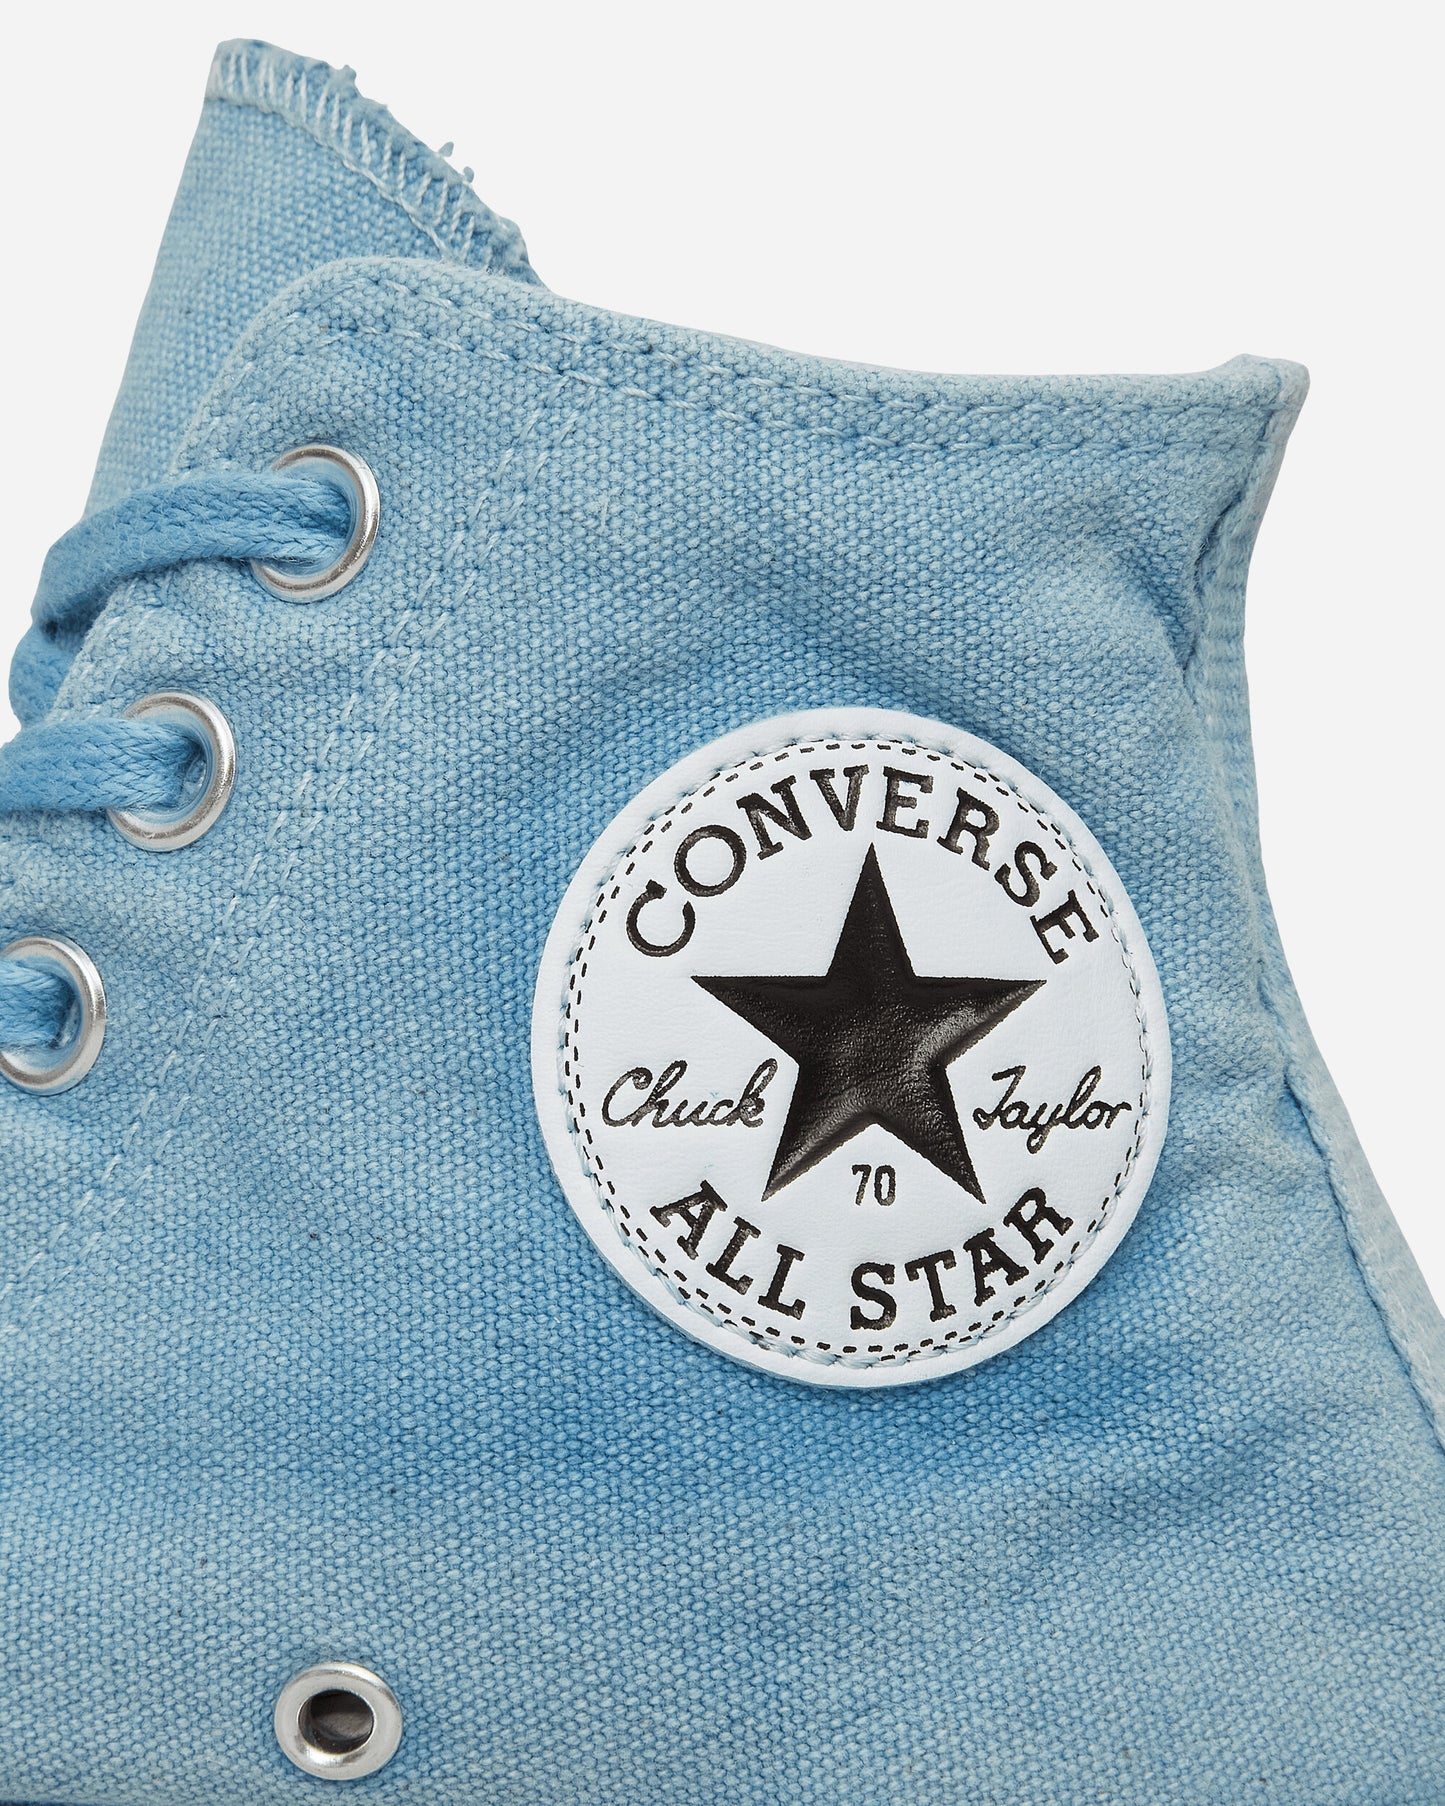 Converse Ct70 Canvas Ltd Icdc Indigo Dyed Sneakers High A06052C